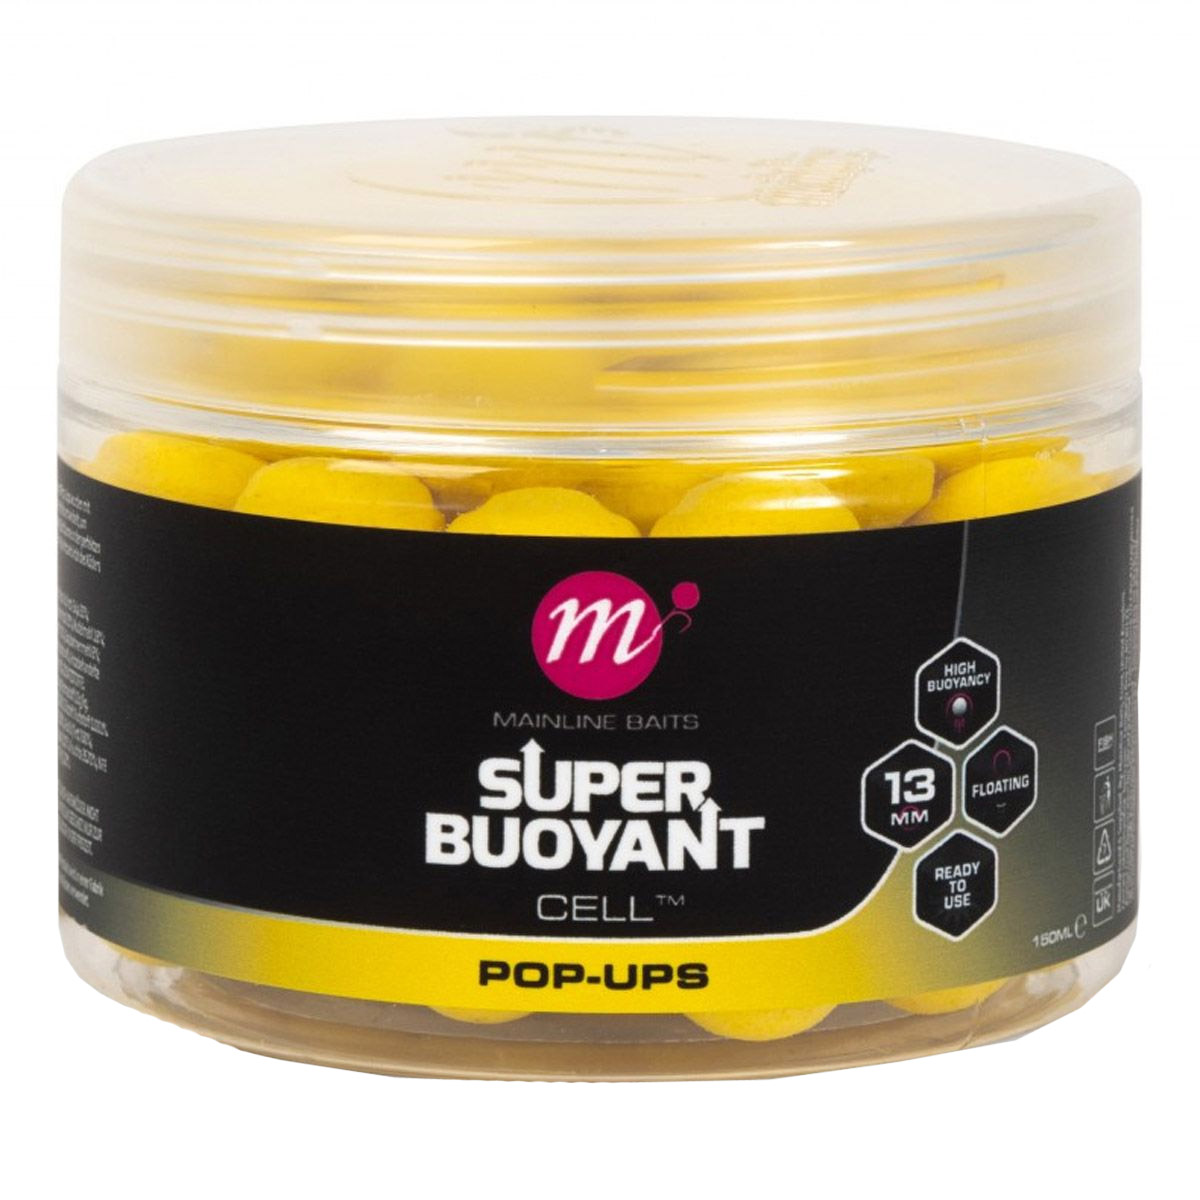 Mainline Super Buoyant Pop-Ups Yellow 13 MM